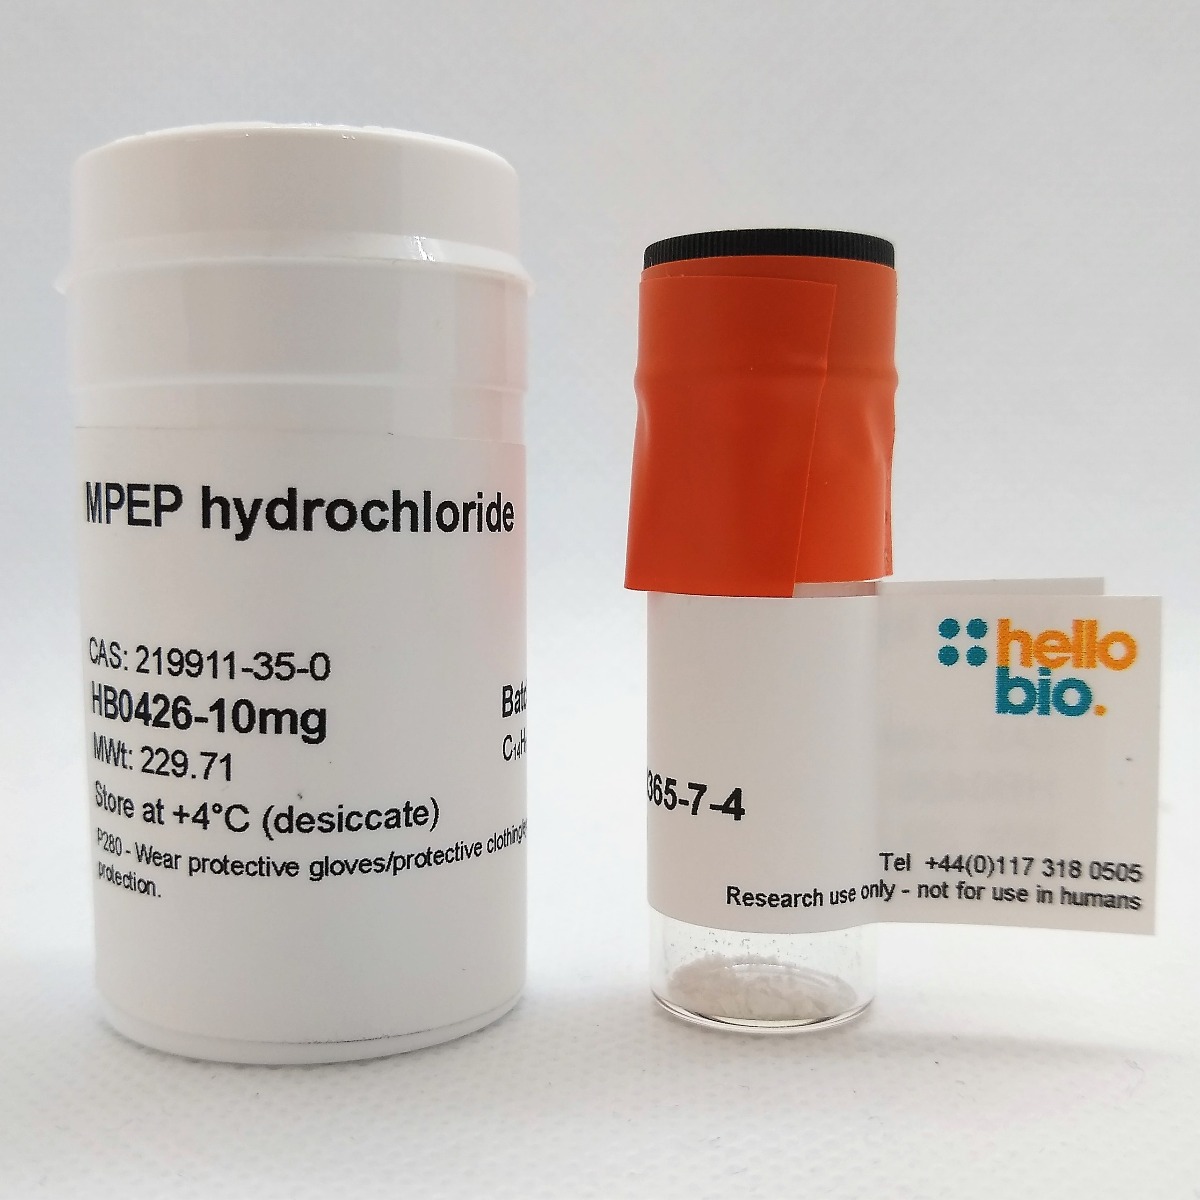 MPEP hydrochloride product vial image | Hello Bio